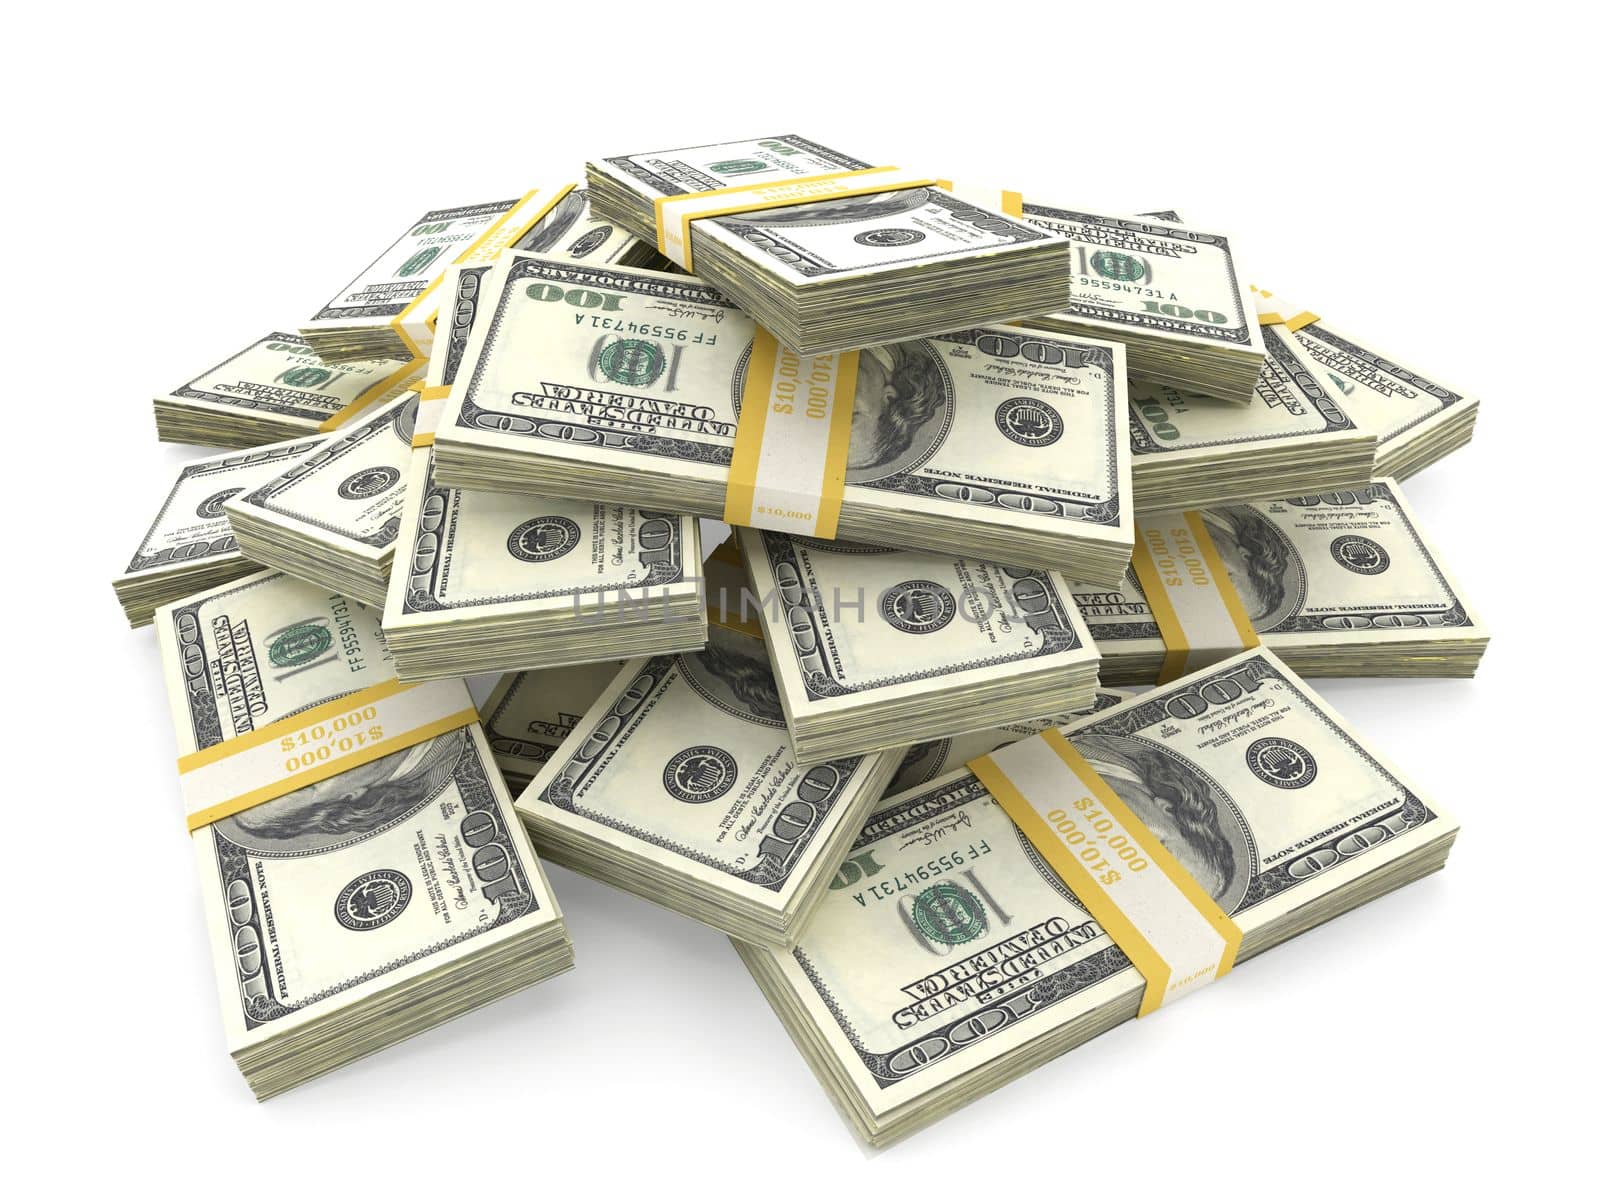 100 dollar bills forming money pile isolated on white background. 3D illustration.